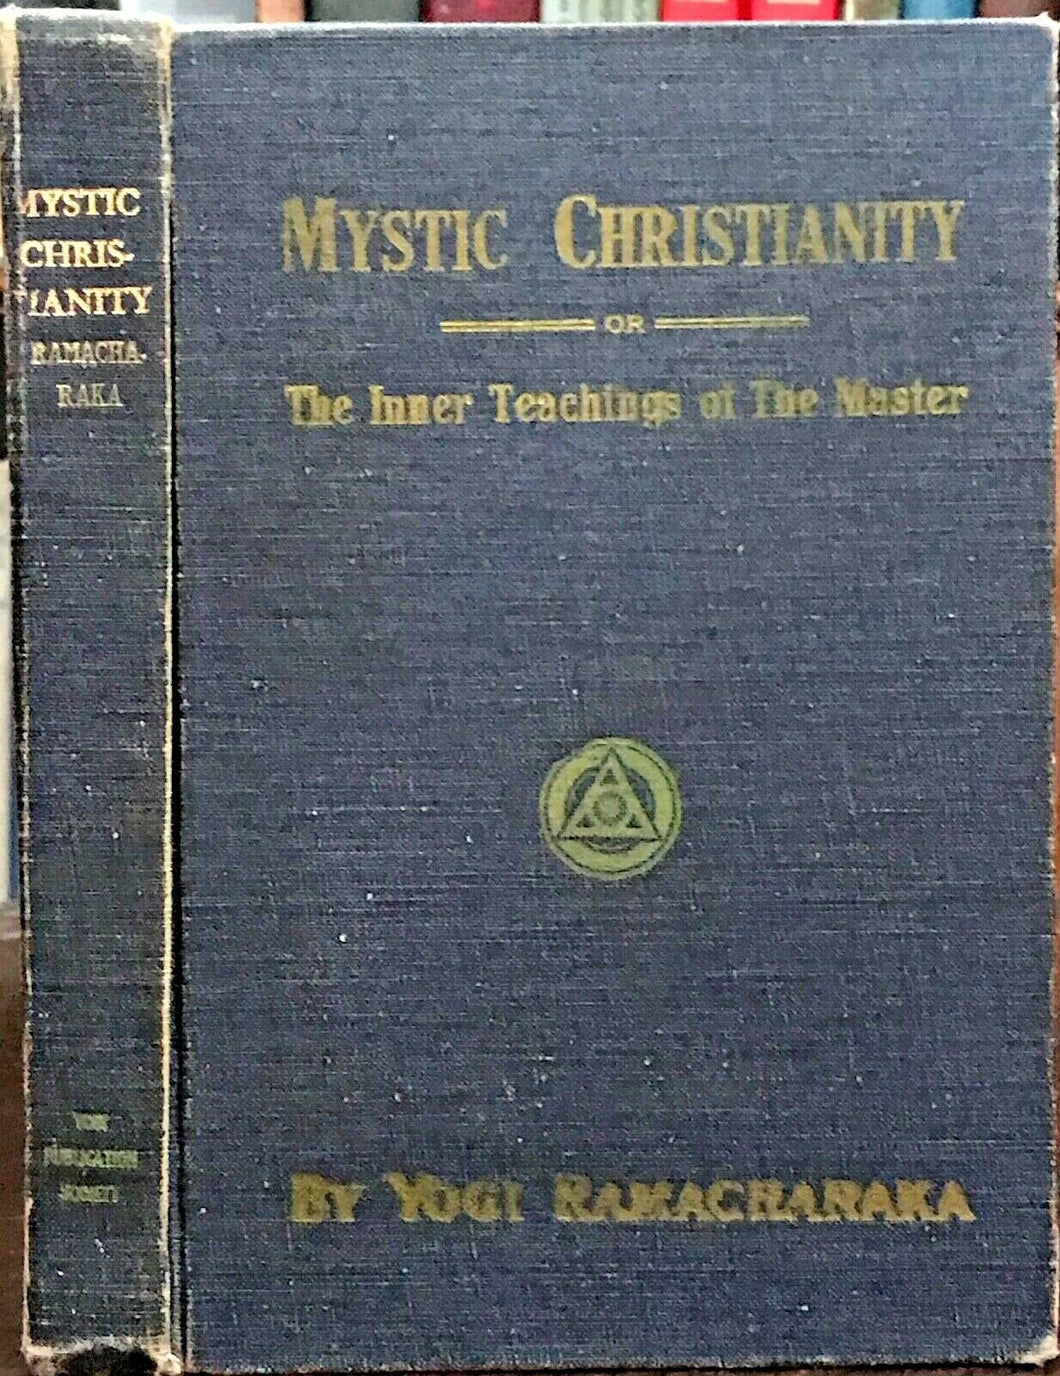 MYSTIC CHRISTIANITY - William Atkinson, 1935 - MYSTICISM CHRIST VIRGIN BIRTH